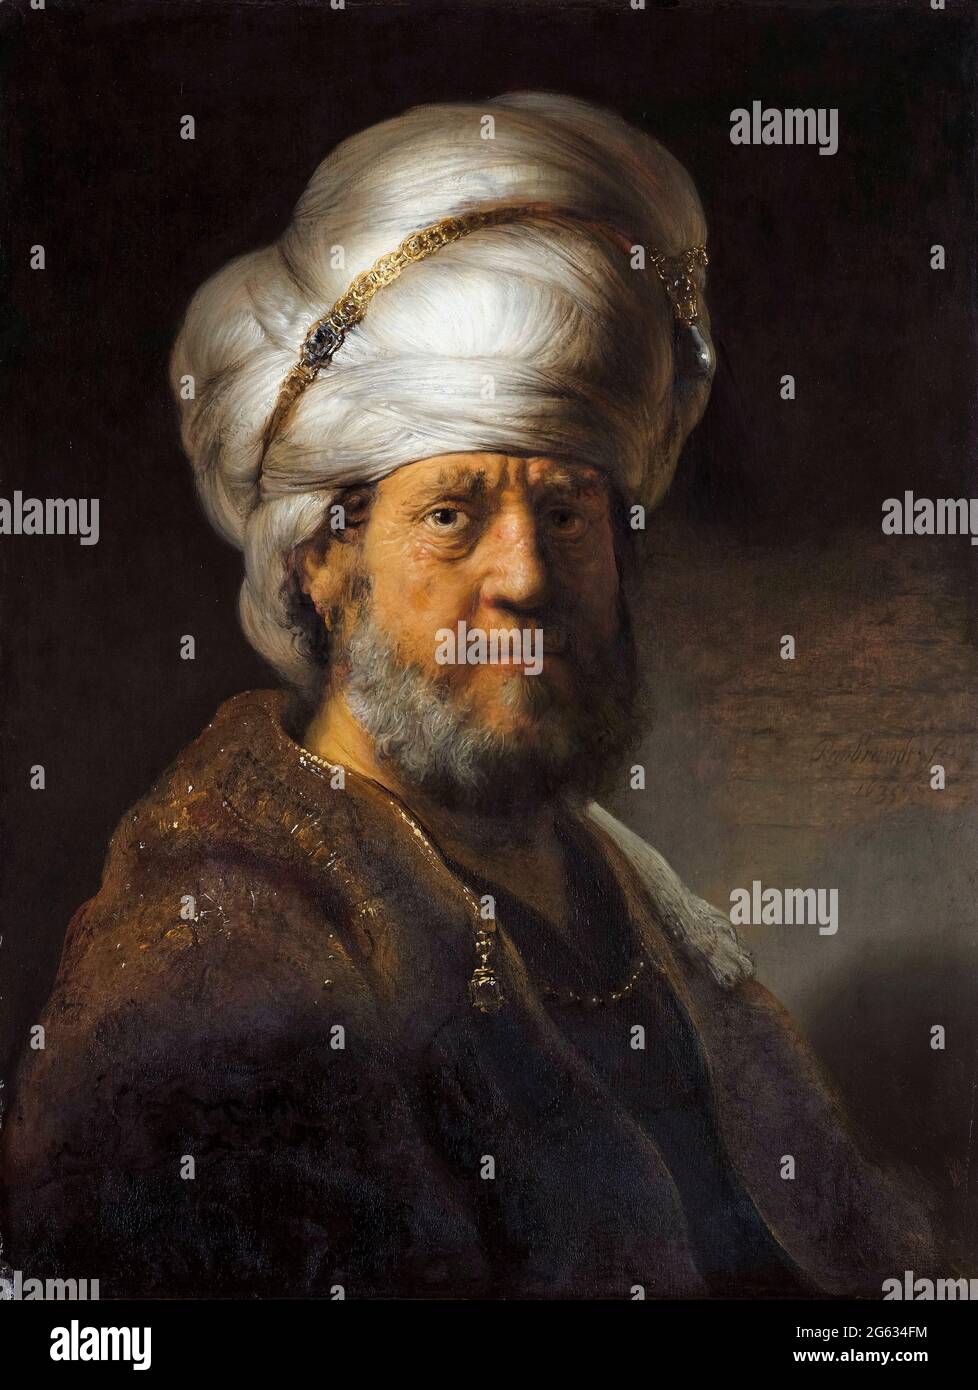 Rembrandt van Rijn, portrait, Man in Oriental Clothing, 1635 Banque D'Images